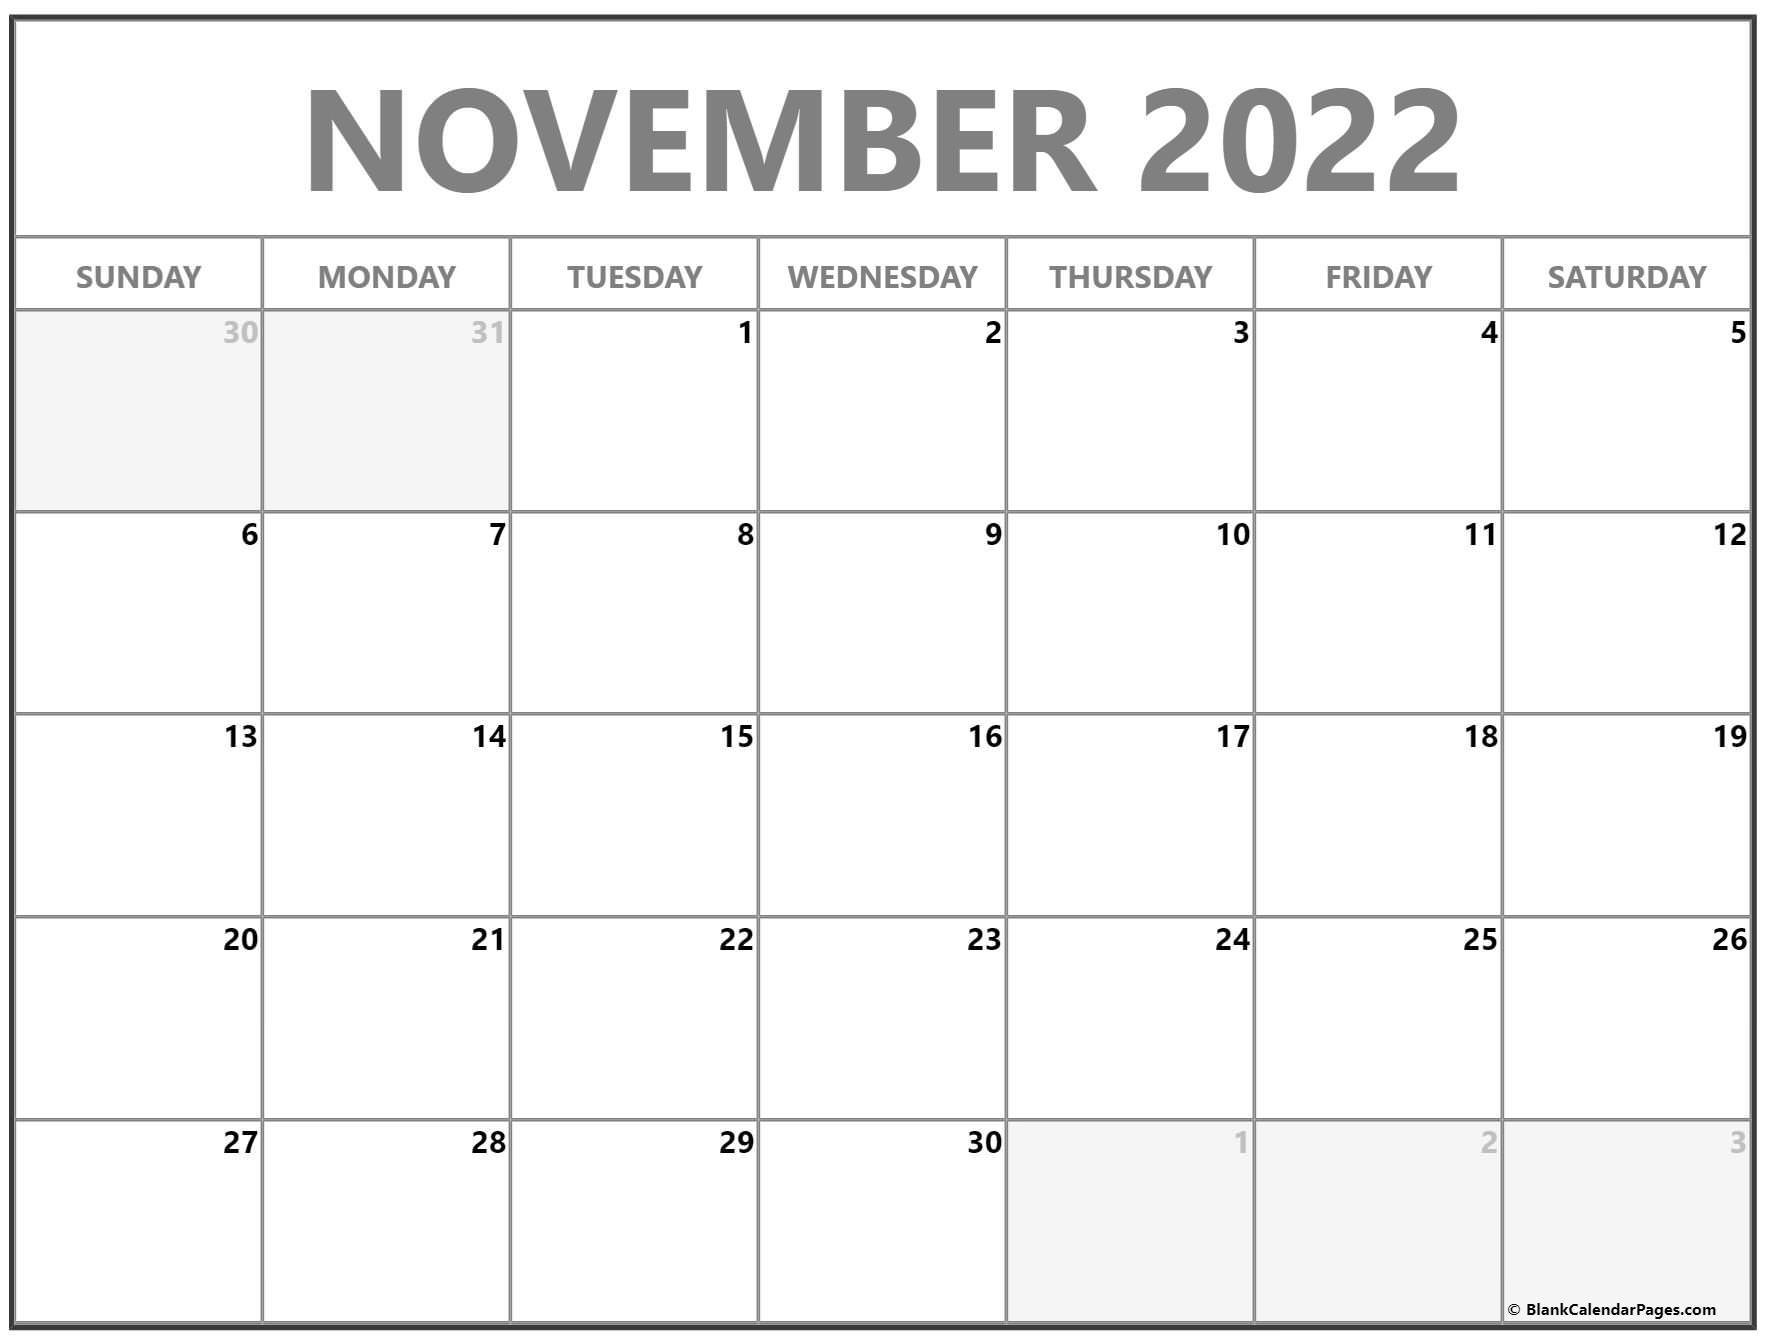 Catch 365 Calendar November 2022